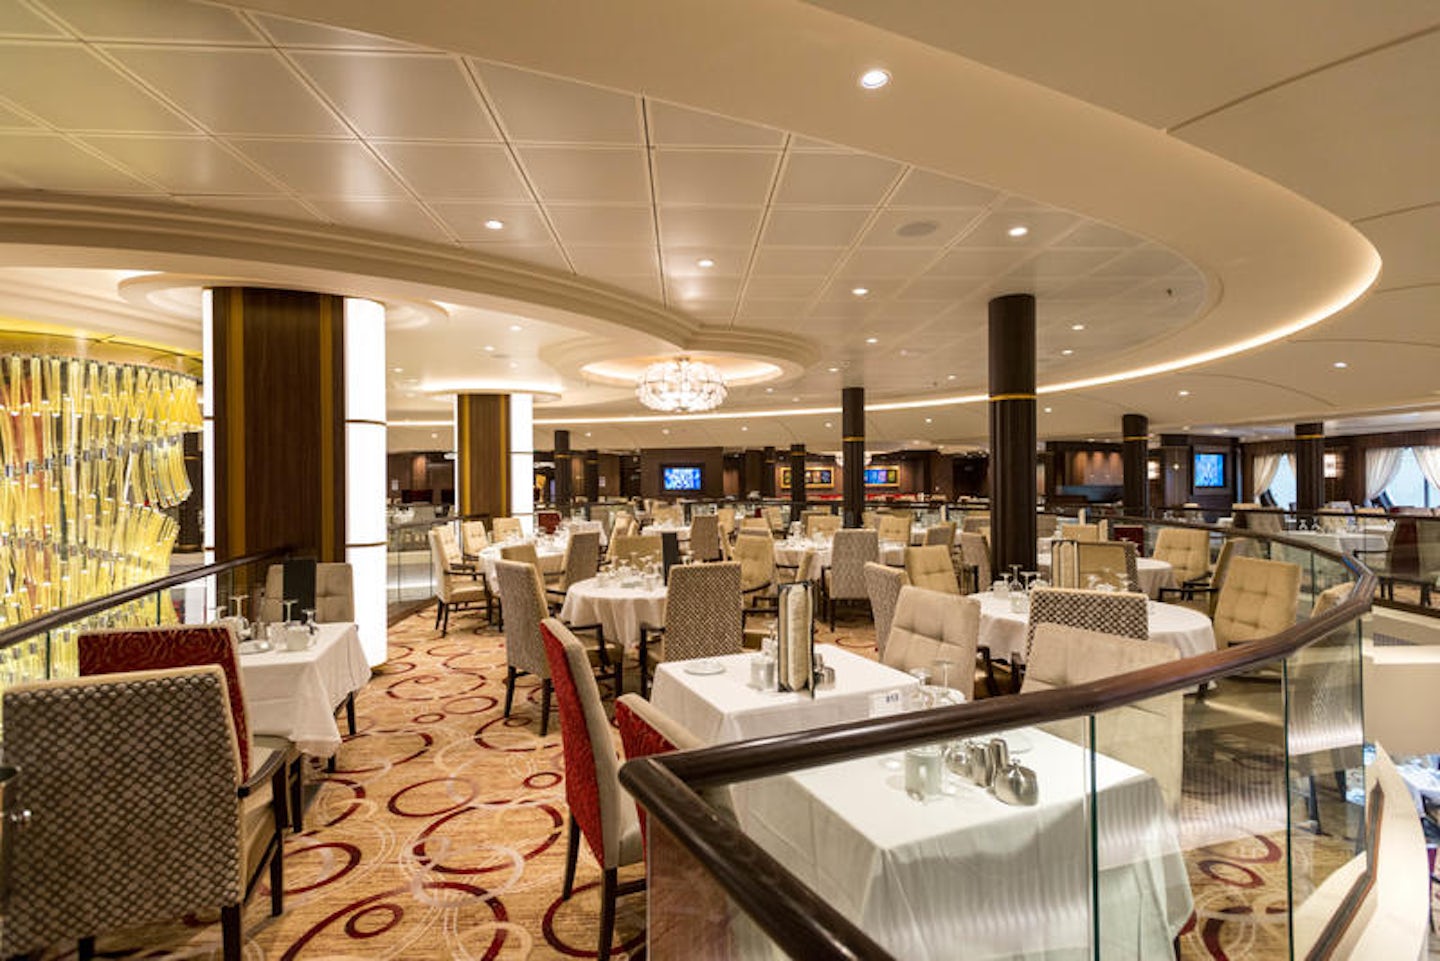 Main Dining Room on Royal Caribbean Symphony of the Seas Cruise Ship